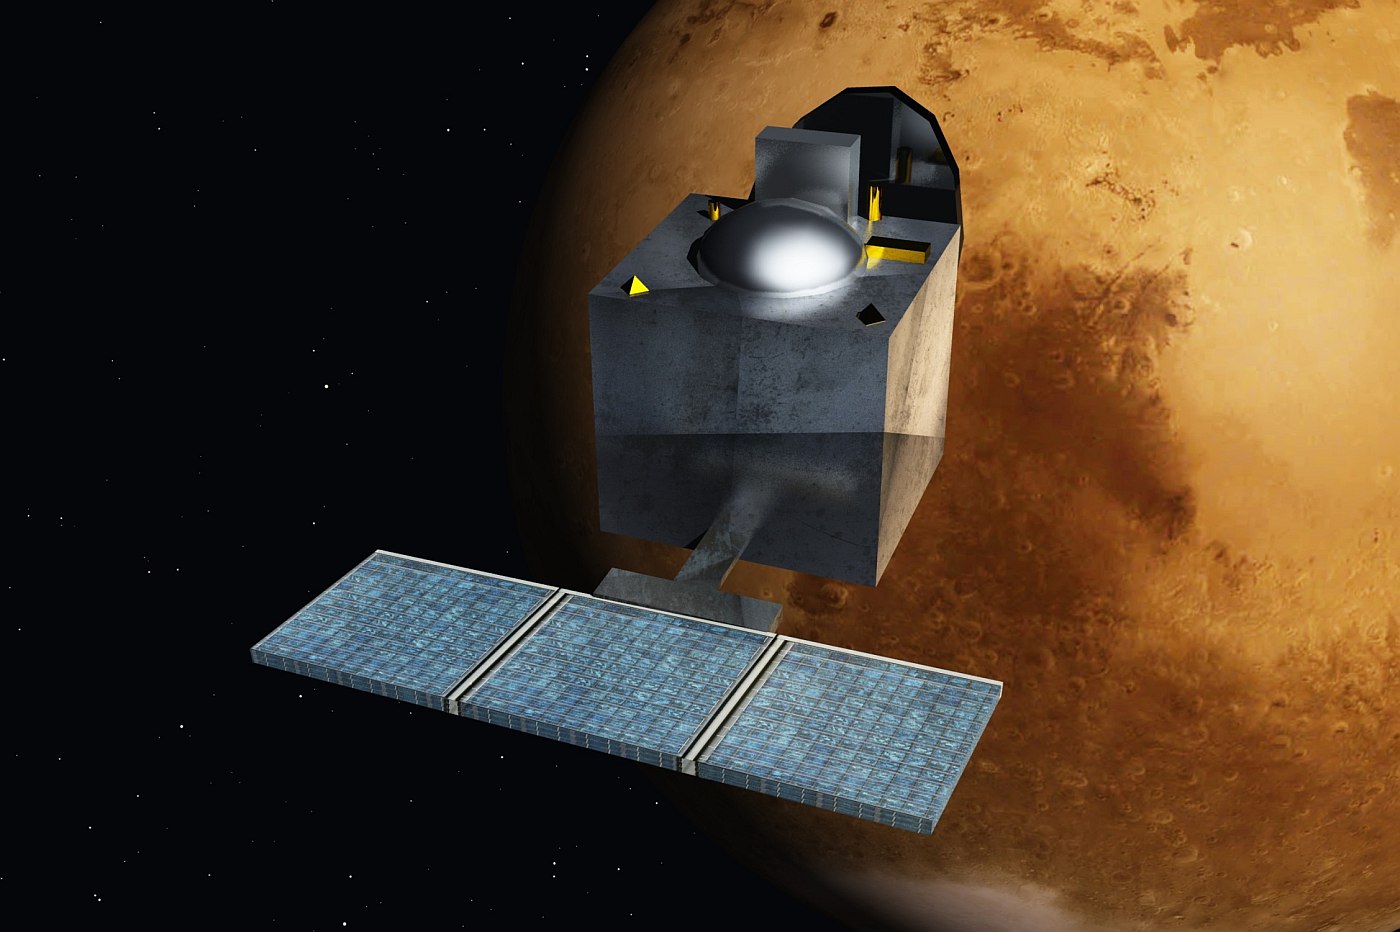 Mangalyaan (Mars Orbiter Mission)